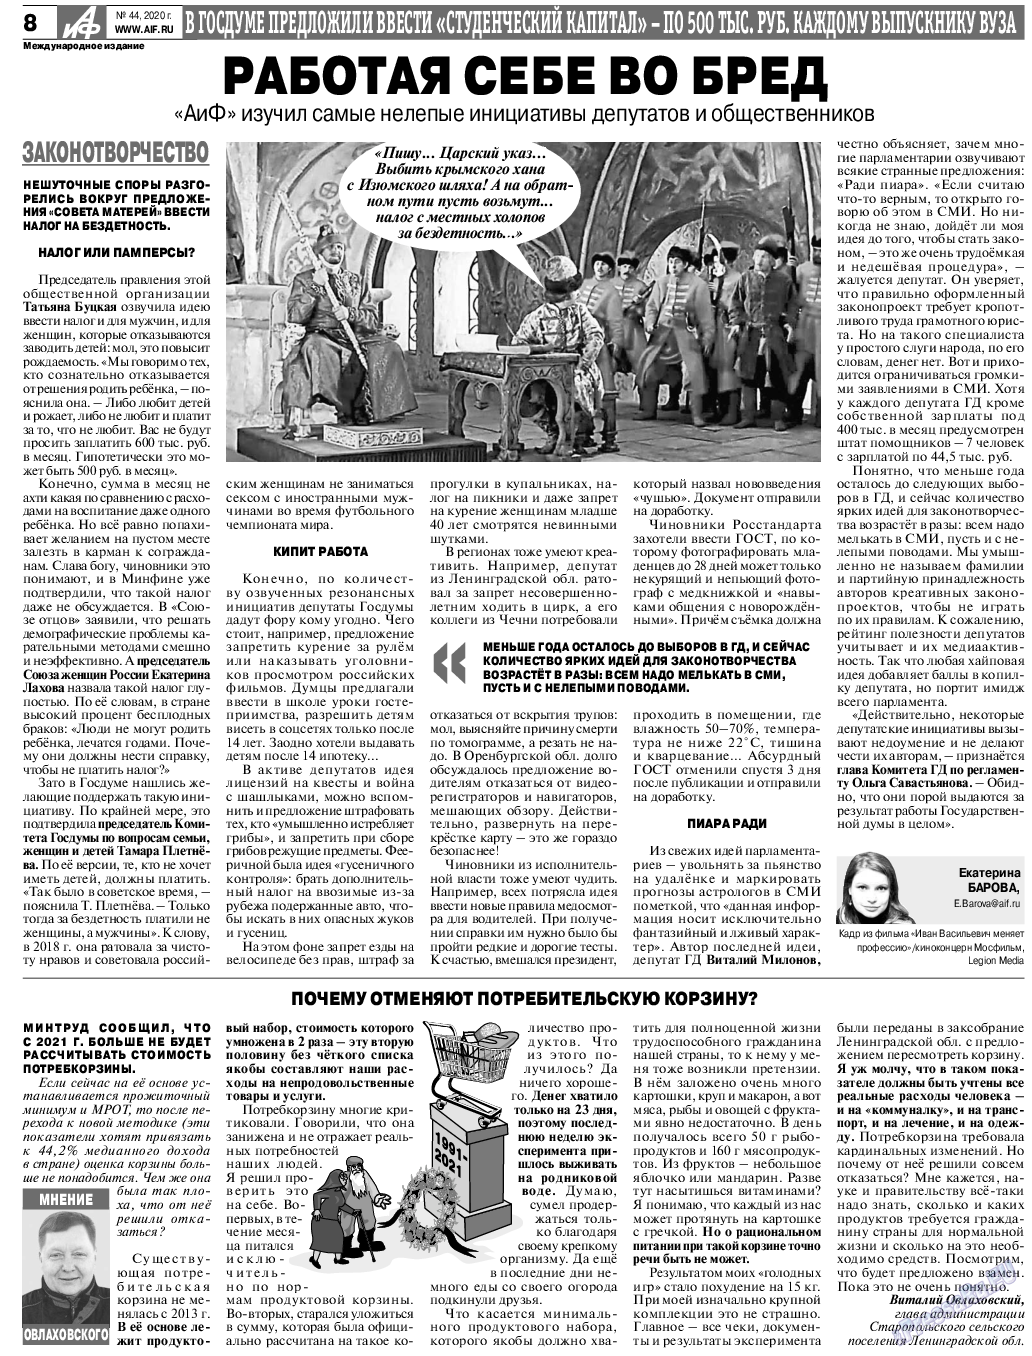 Аргументы и факты Европа, газета. 2020 №44 стр.8